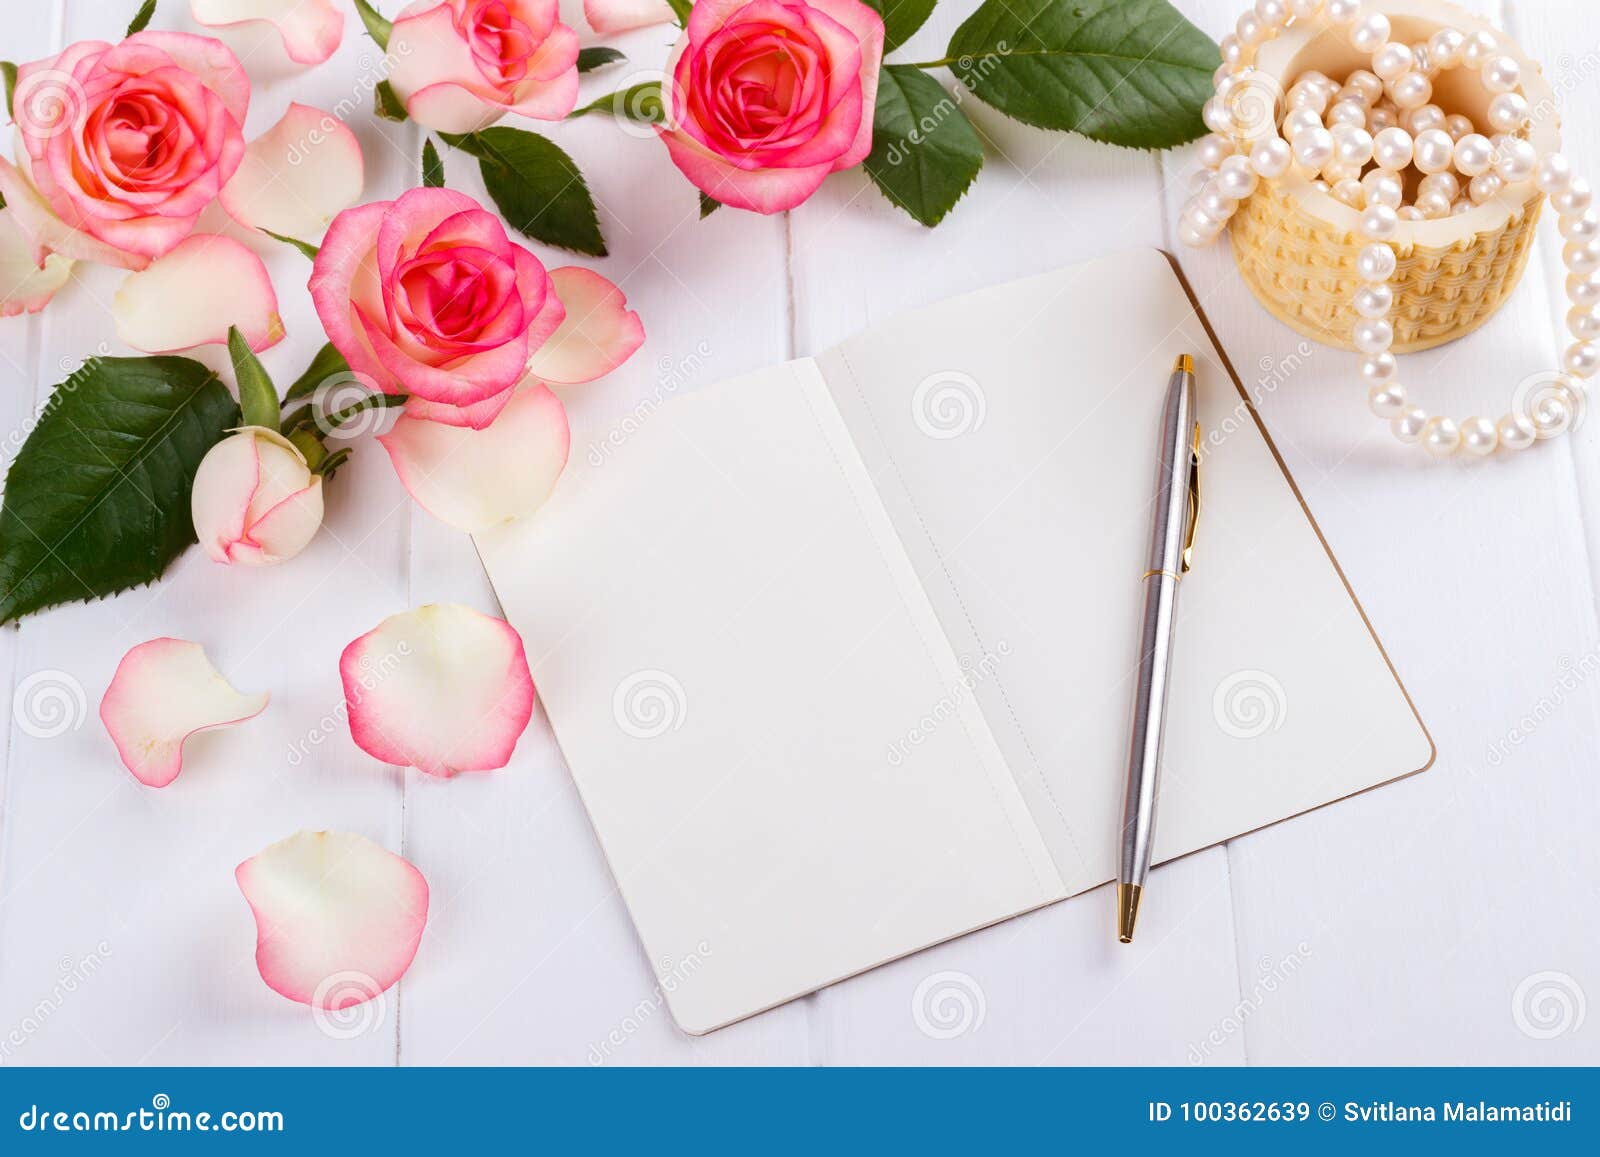 https://thumbs.dreamstime.com/z/blank-diary-journal-open-blank-diary-journal-text-ballpoint-pen-pink-roses-pearls-wooden-desk-overhead-100362639.jpg